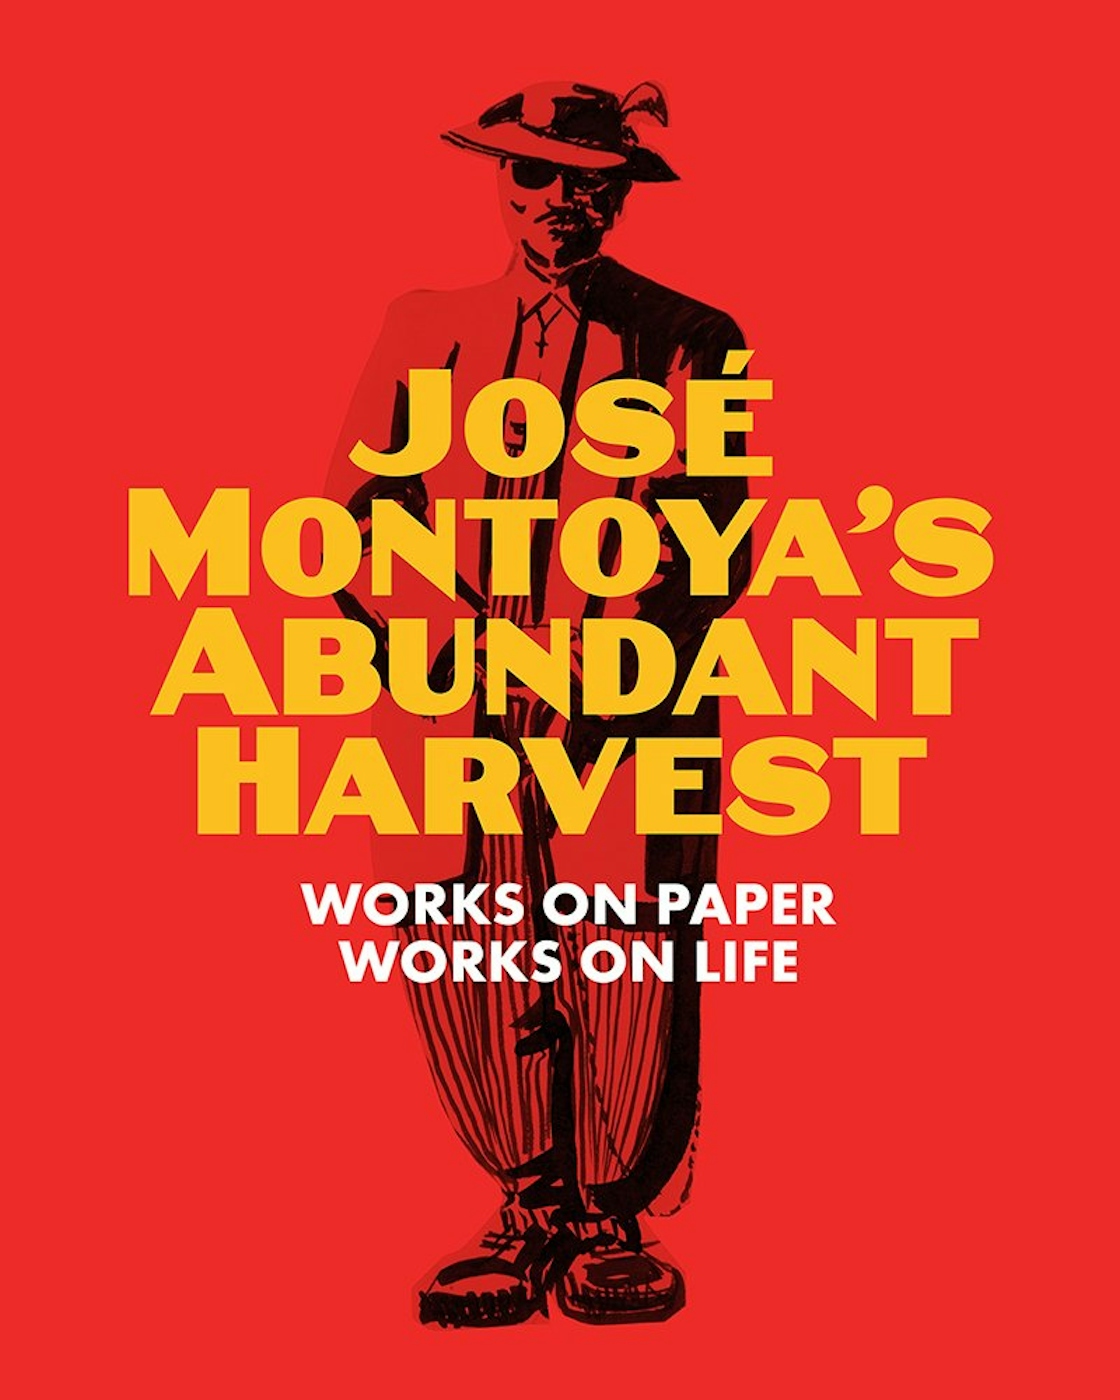 Jose Montoya